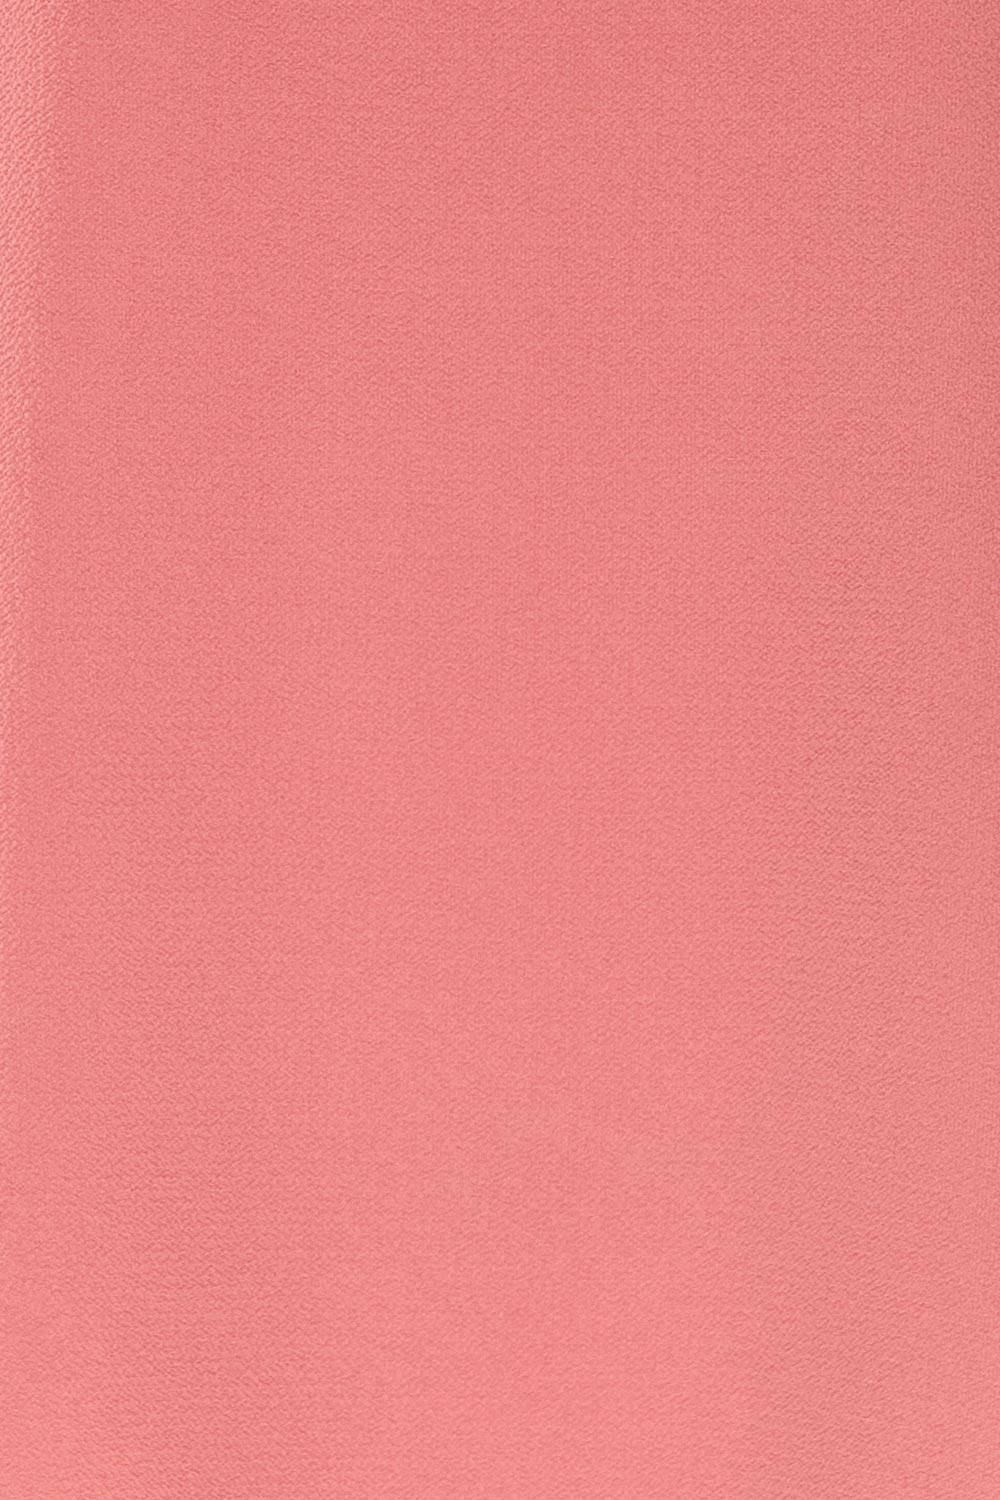 Perth Pink Crepe Short Sleeve Blouse | La petite garçonne fabric